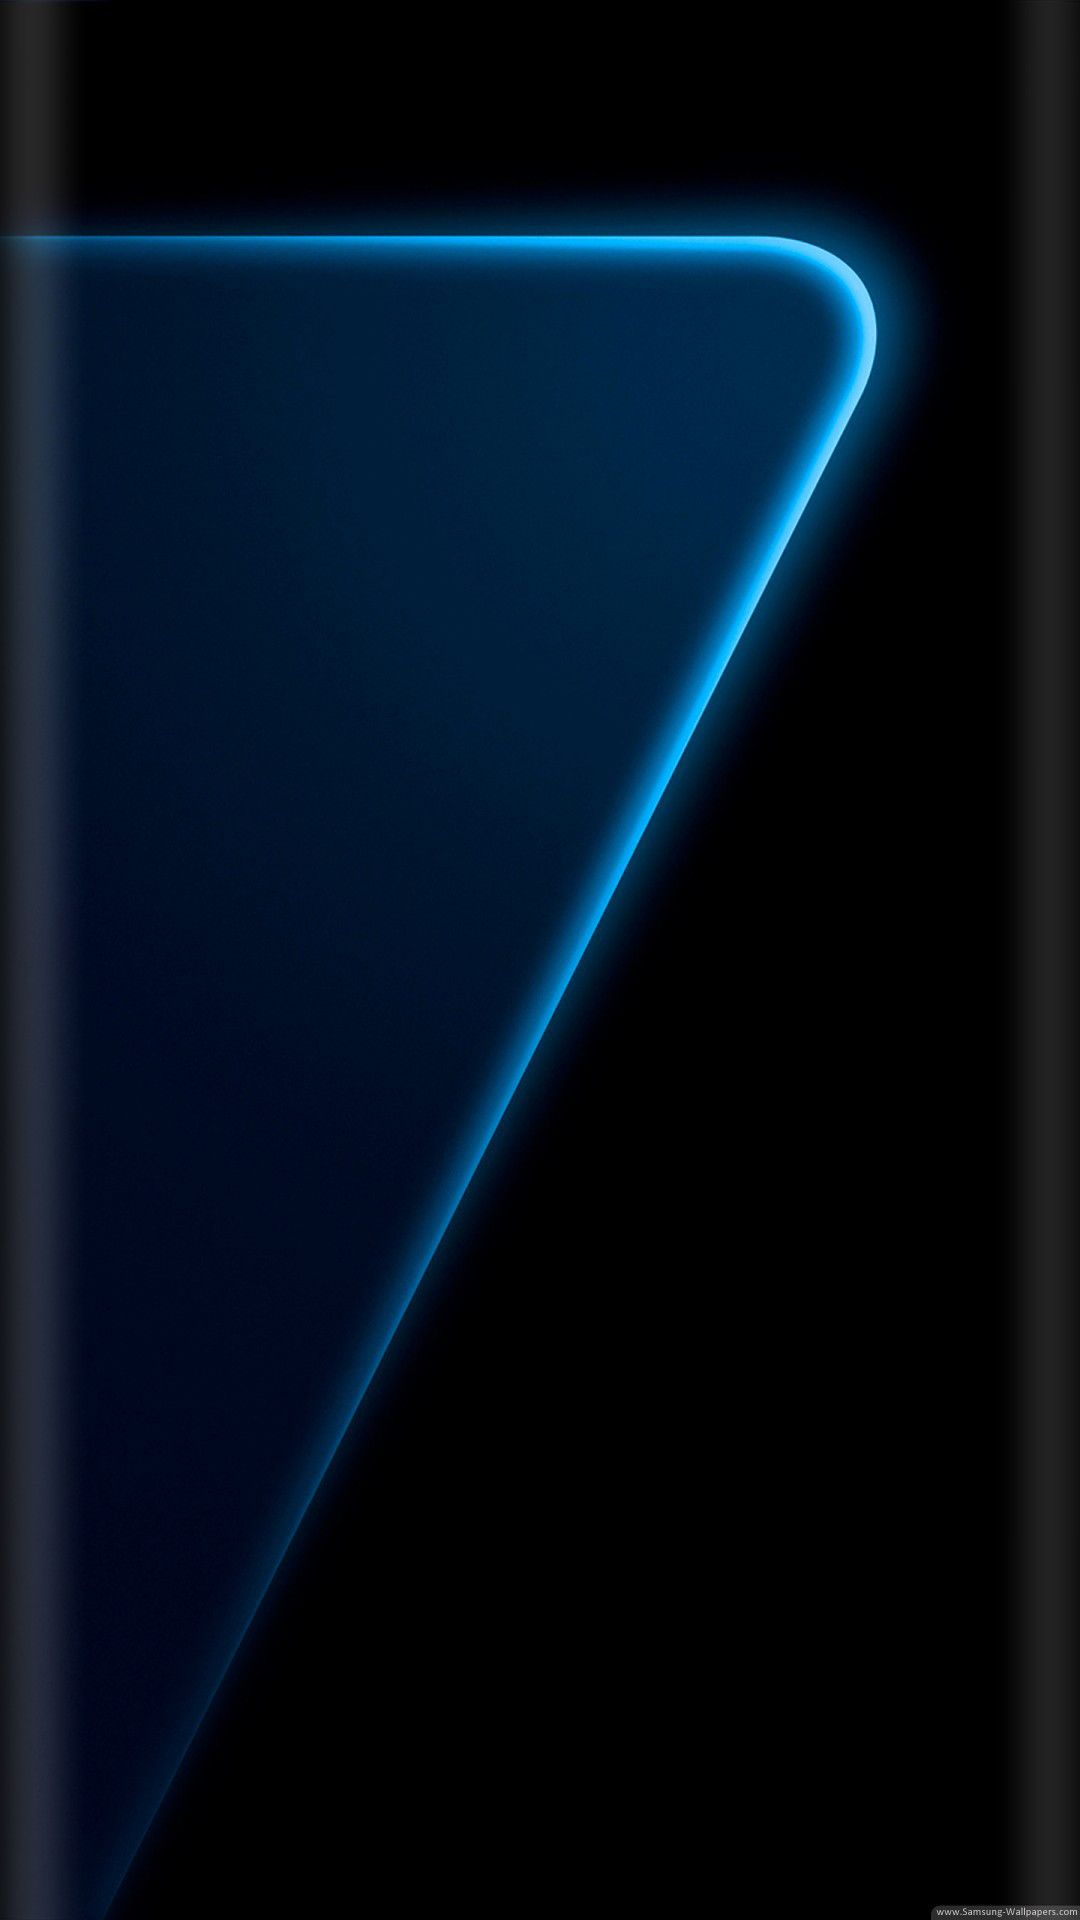 Samsung Logo Black Wallpapers On Wallpaperdog